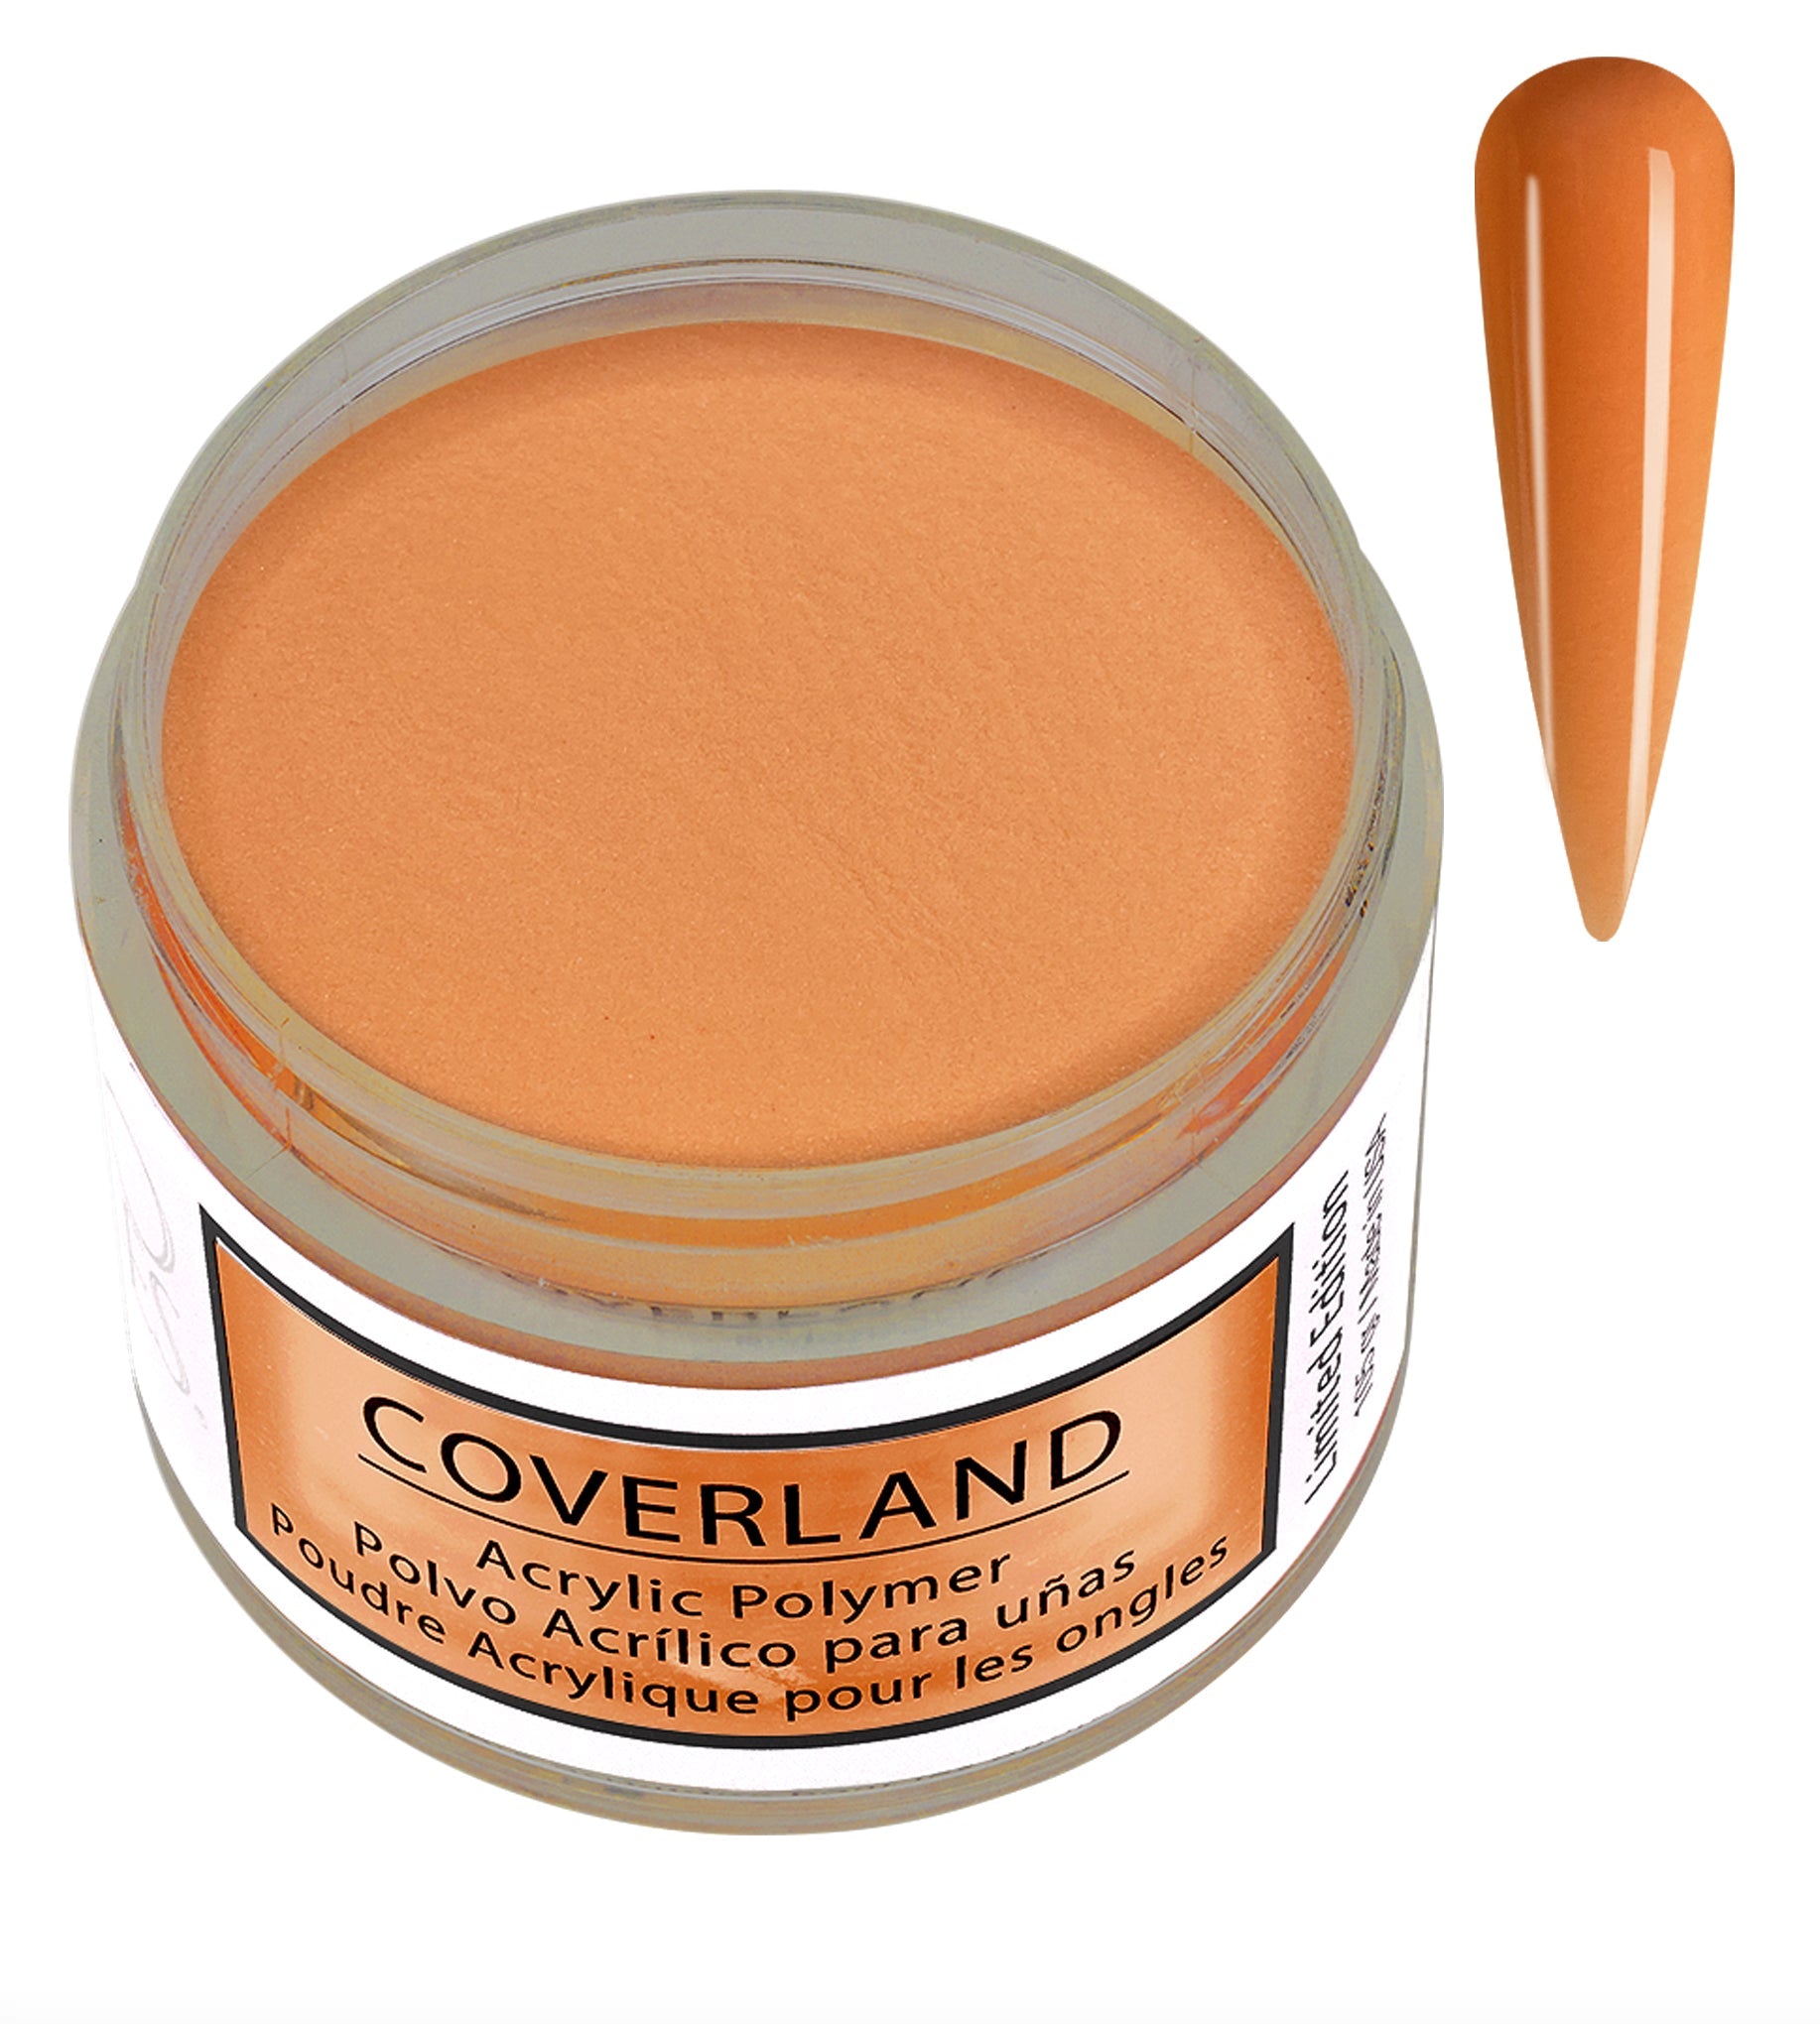 Coverland Acrylic Powder - 